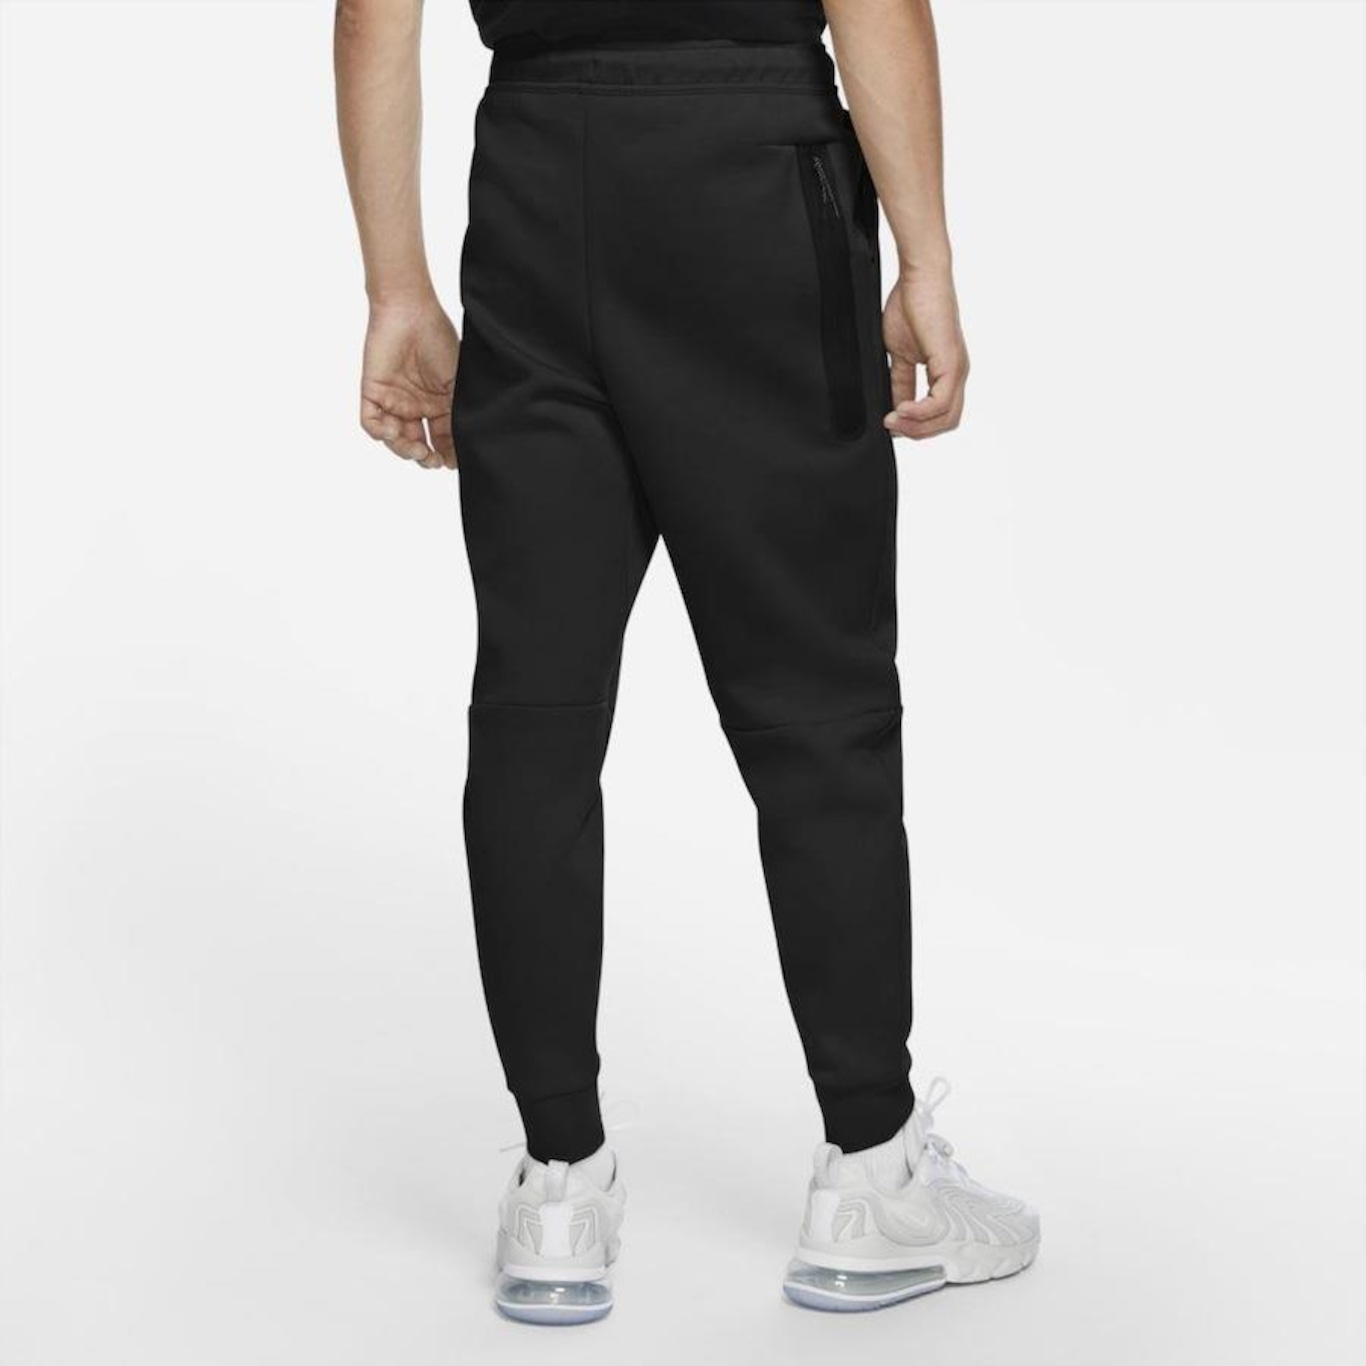 Calça Nike Sportwear Tech Fleece - Masculina em Promoção